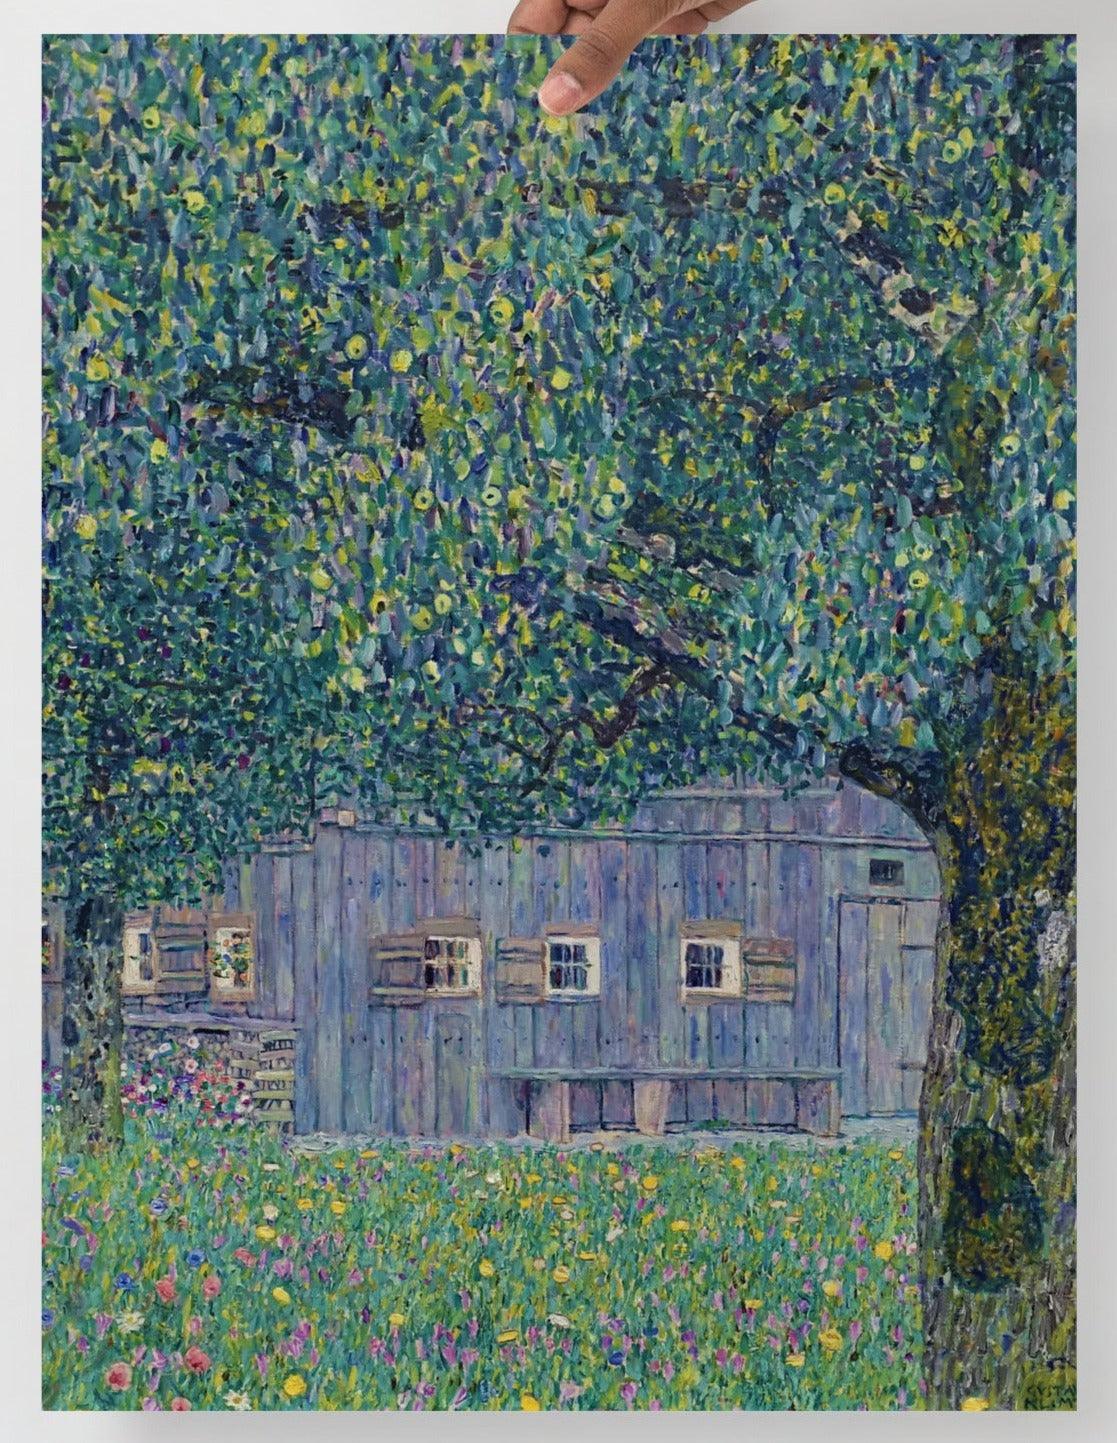 A Farmhouse In Upper Austria by Gustav Klimt poster on a plain backdrop in size 18x24”.